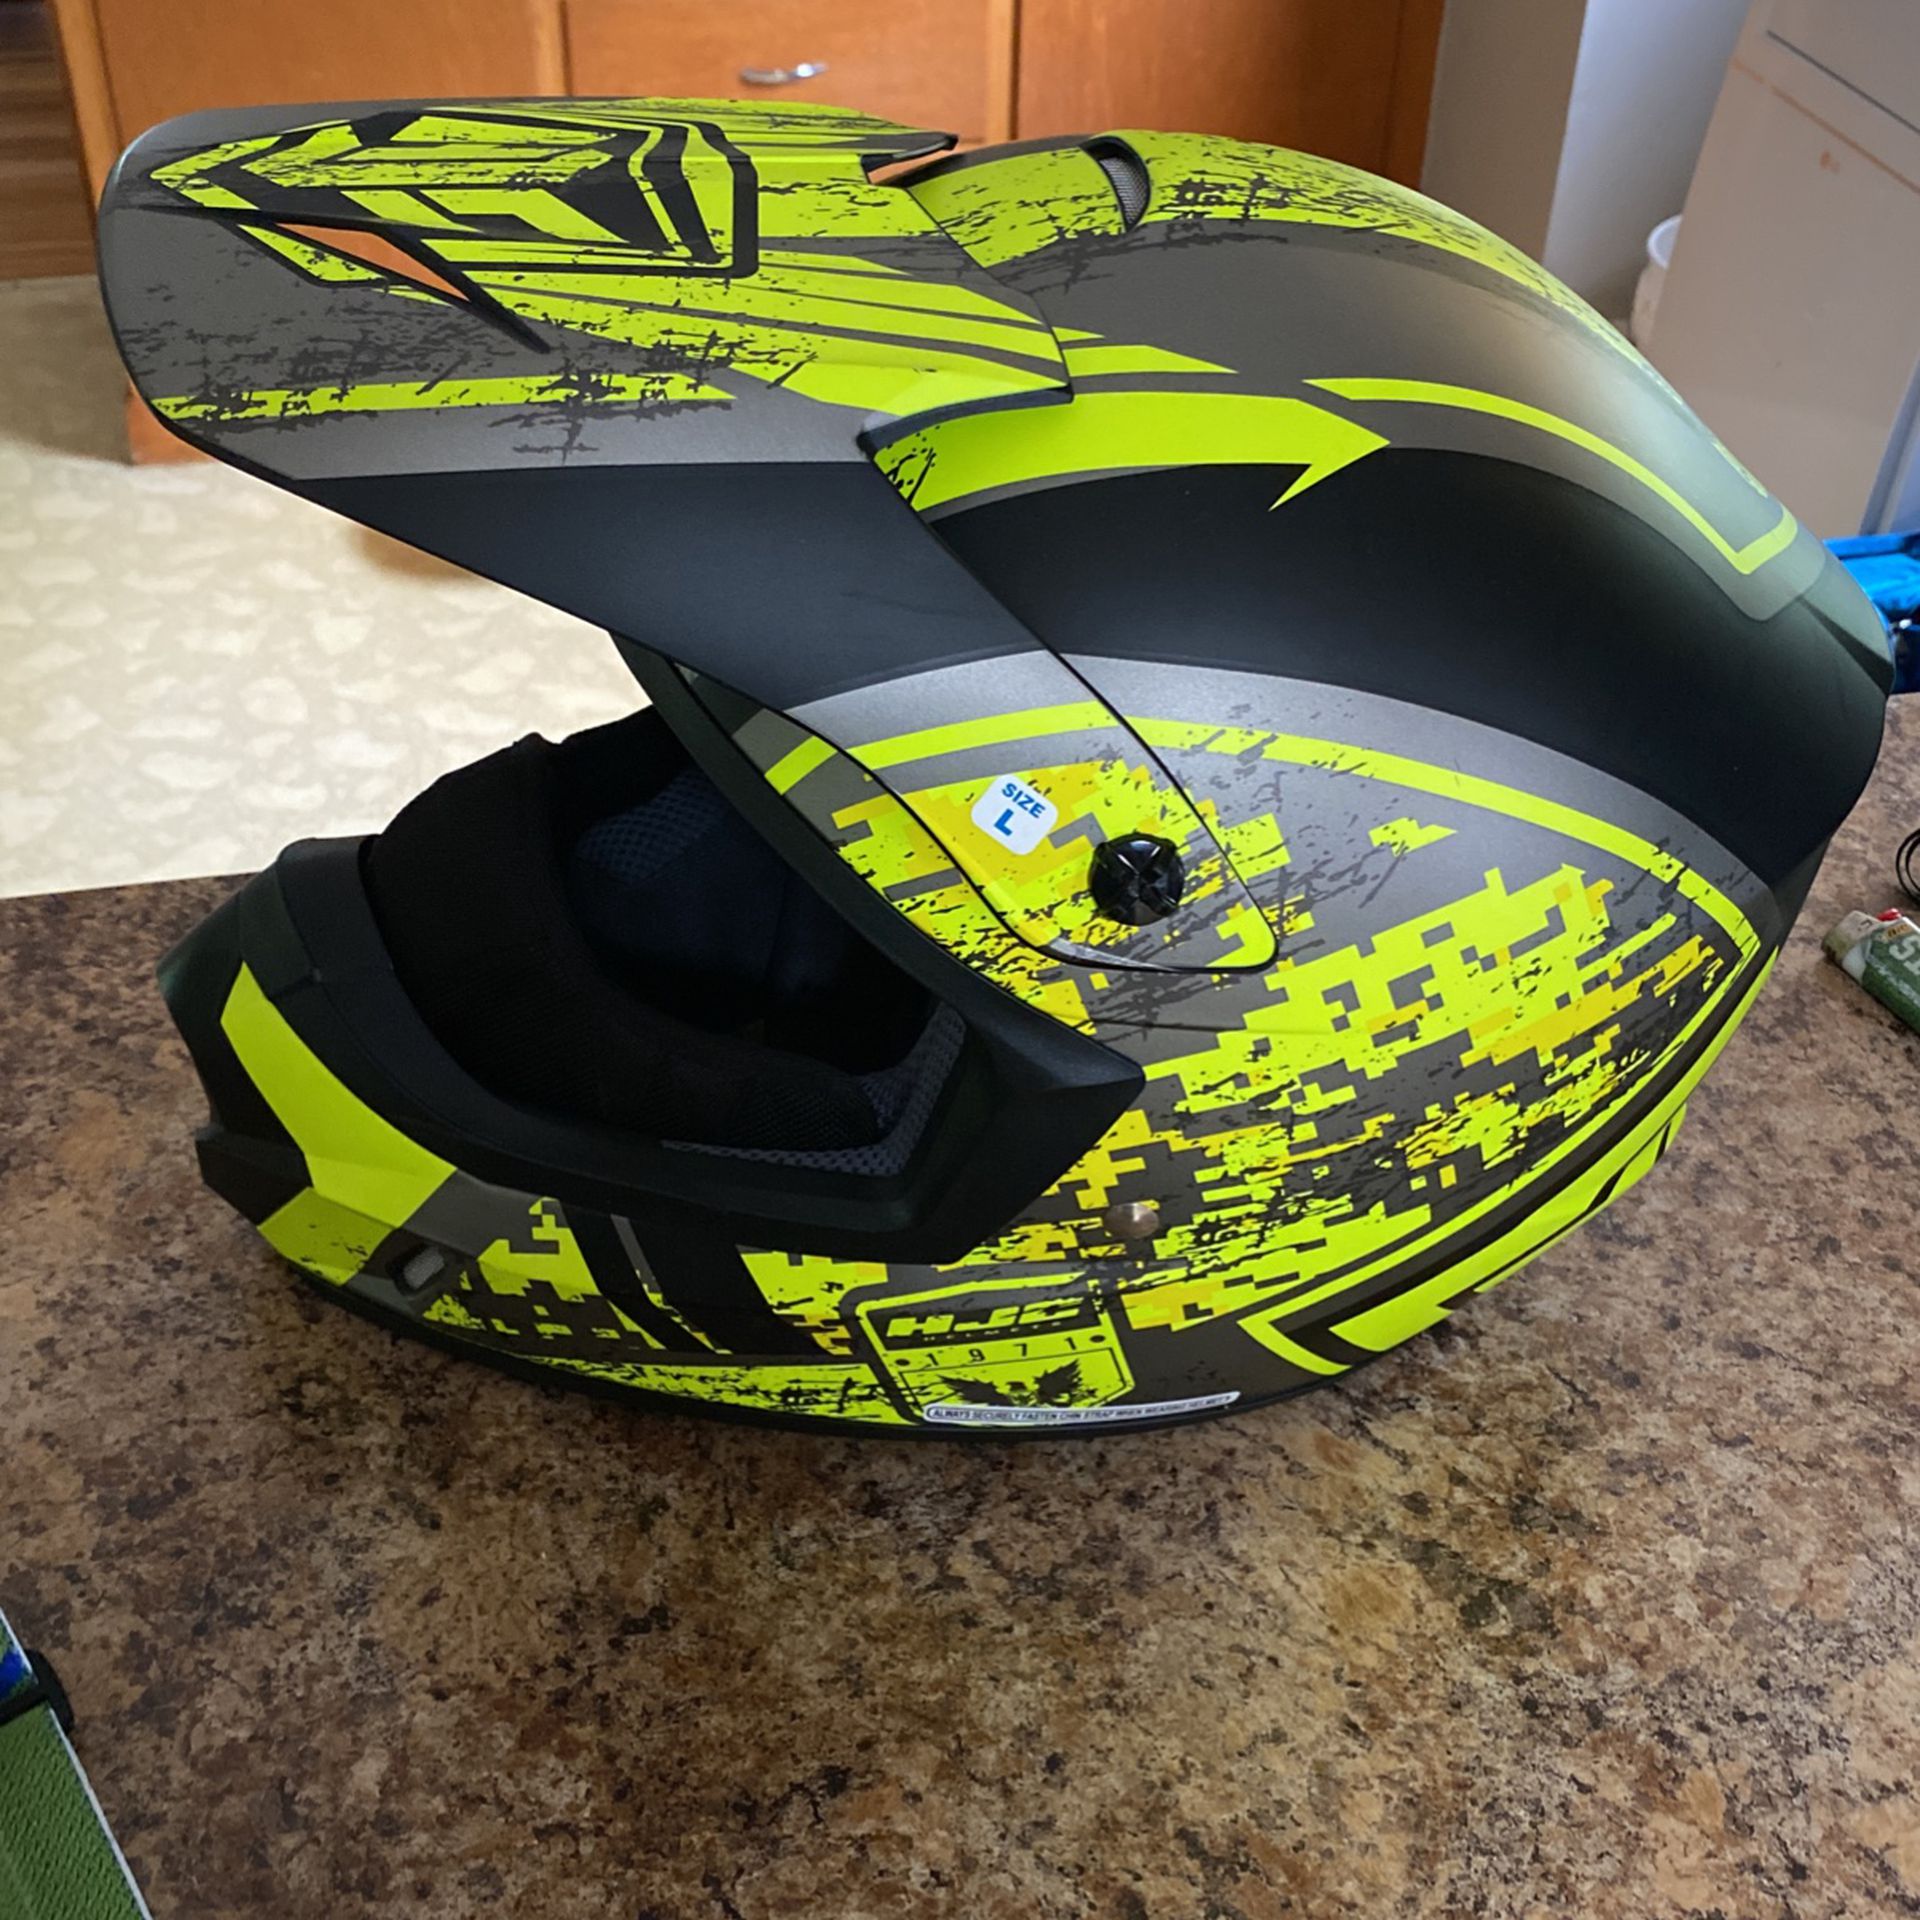 Snowmobile Helmet